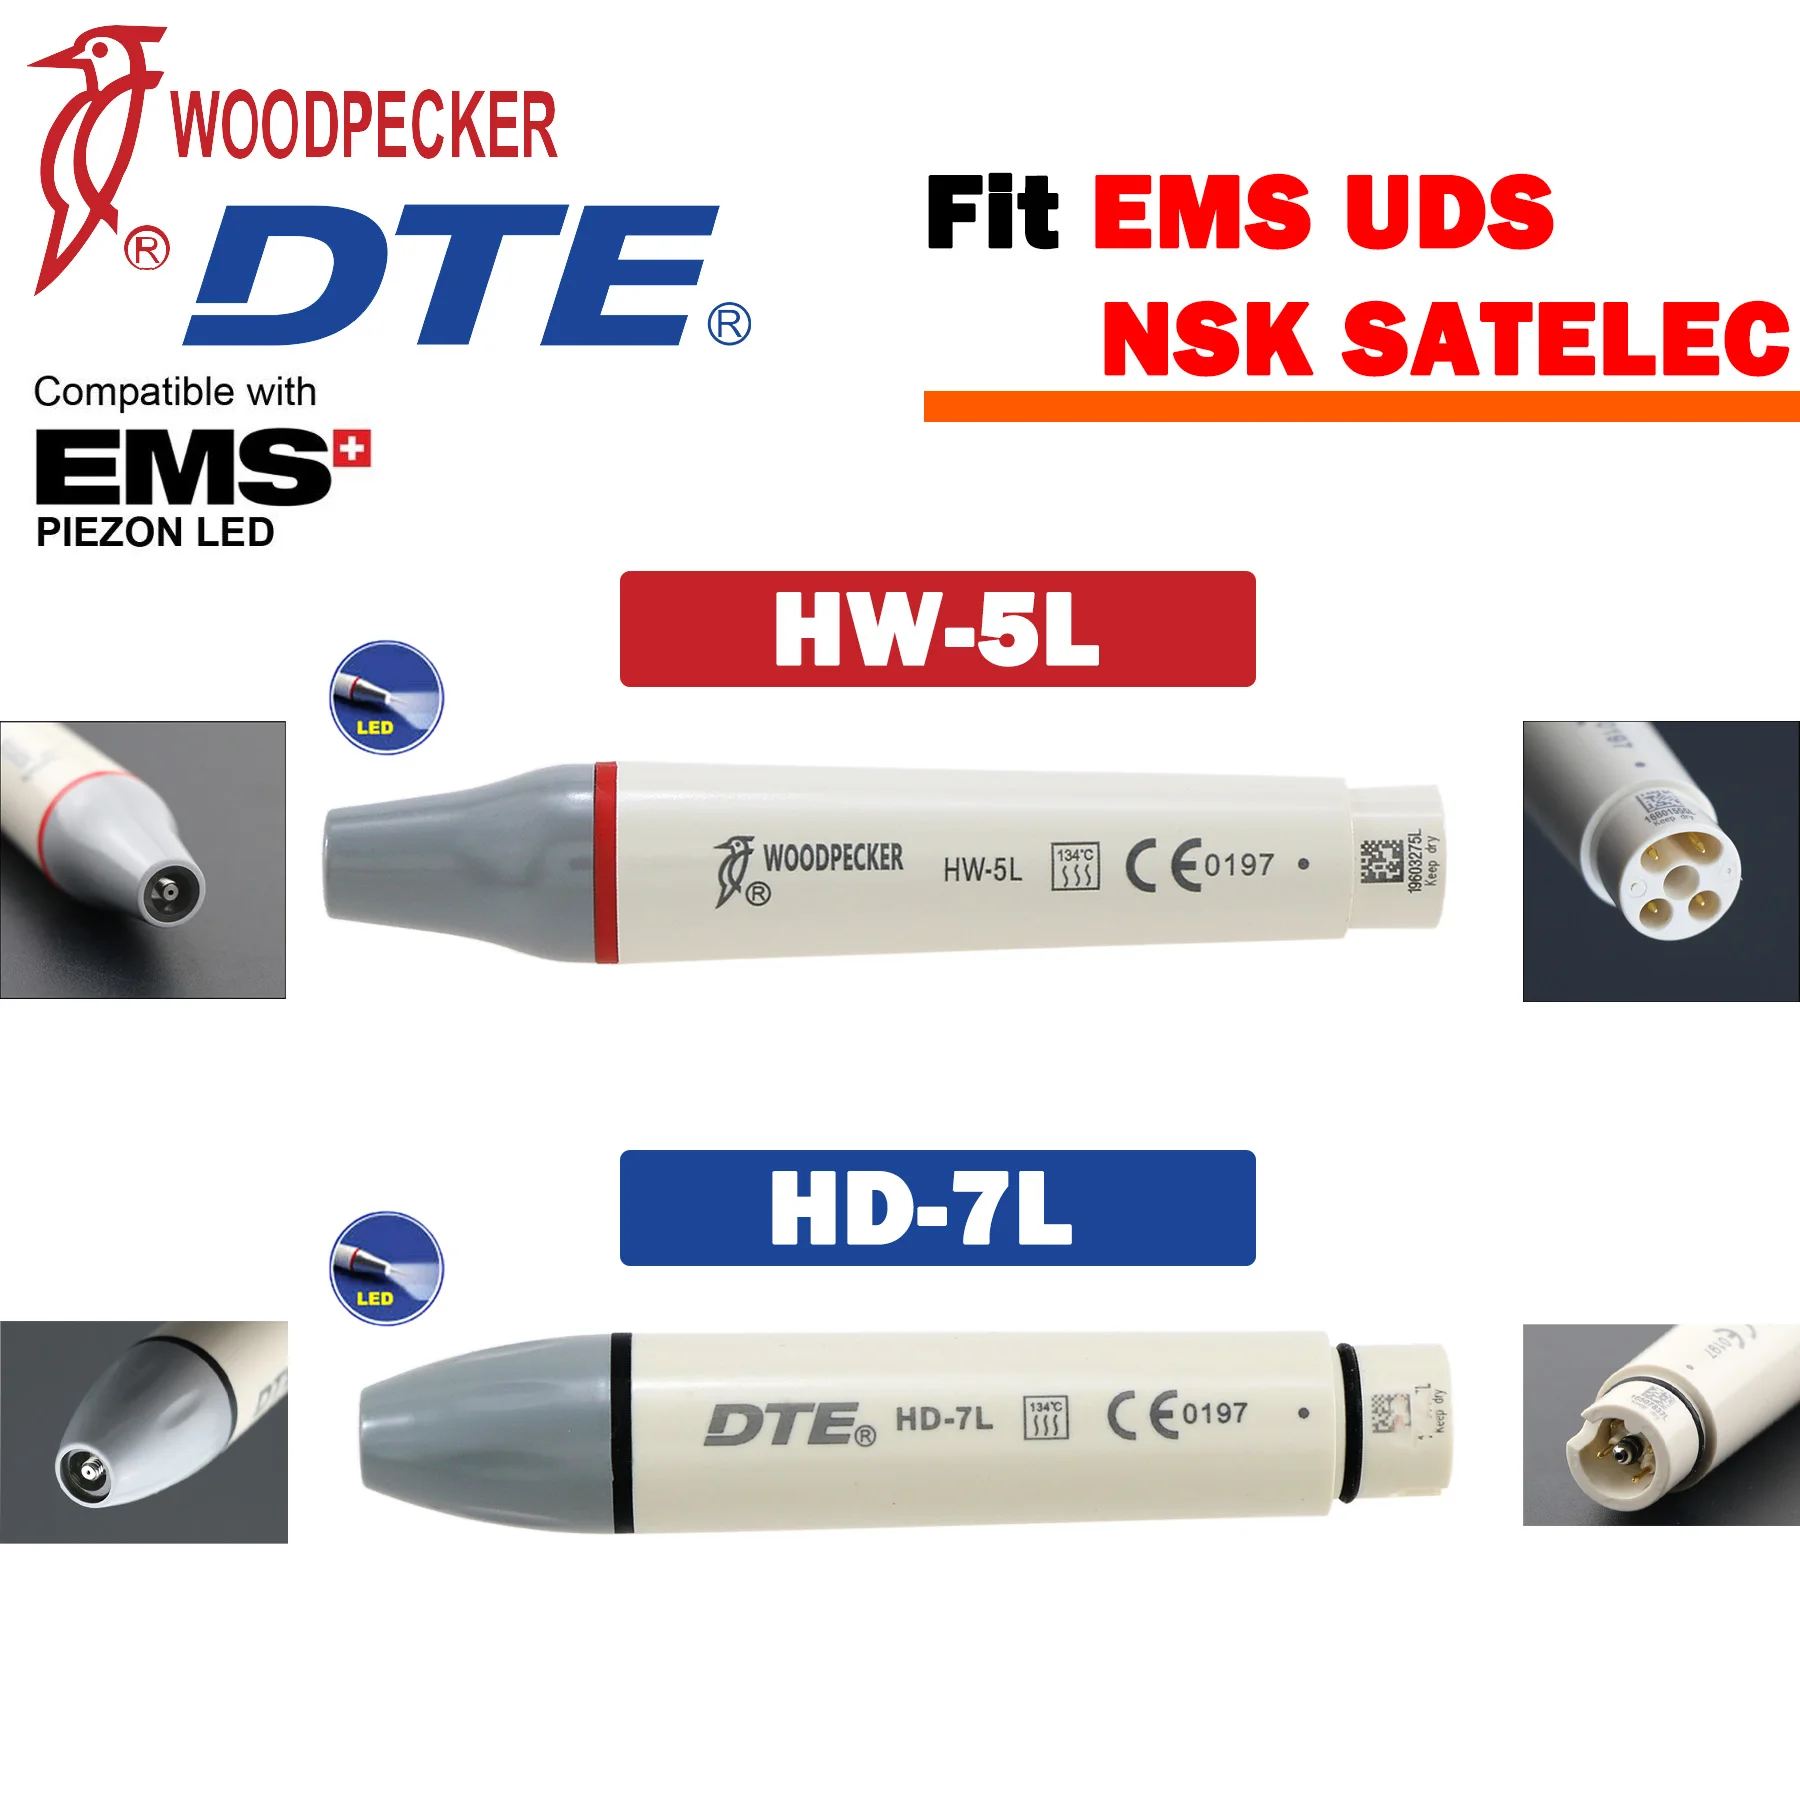 

Woodpecker DTE Dental Ultrasonic Scaler Handpiece LED Light HW-5L HD-7L Fit EMS UDS NSK SATELEC Dentistry Teeth Whitening